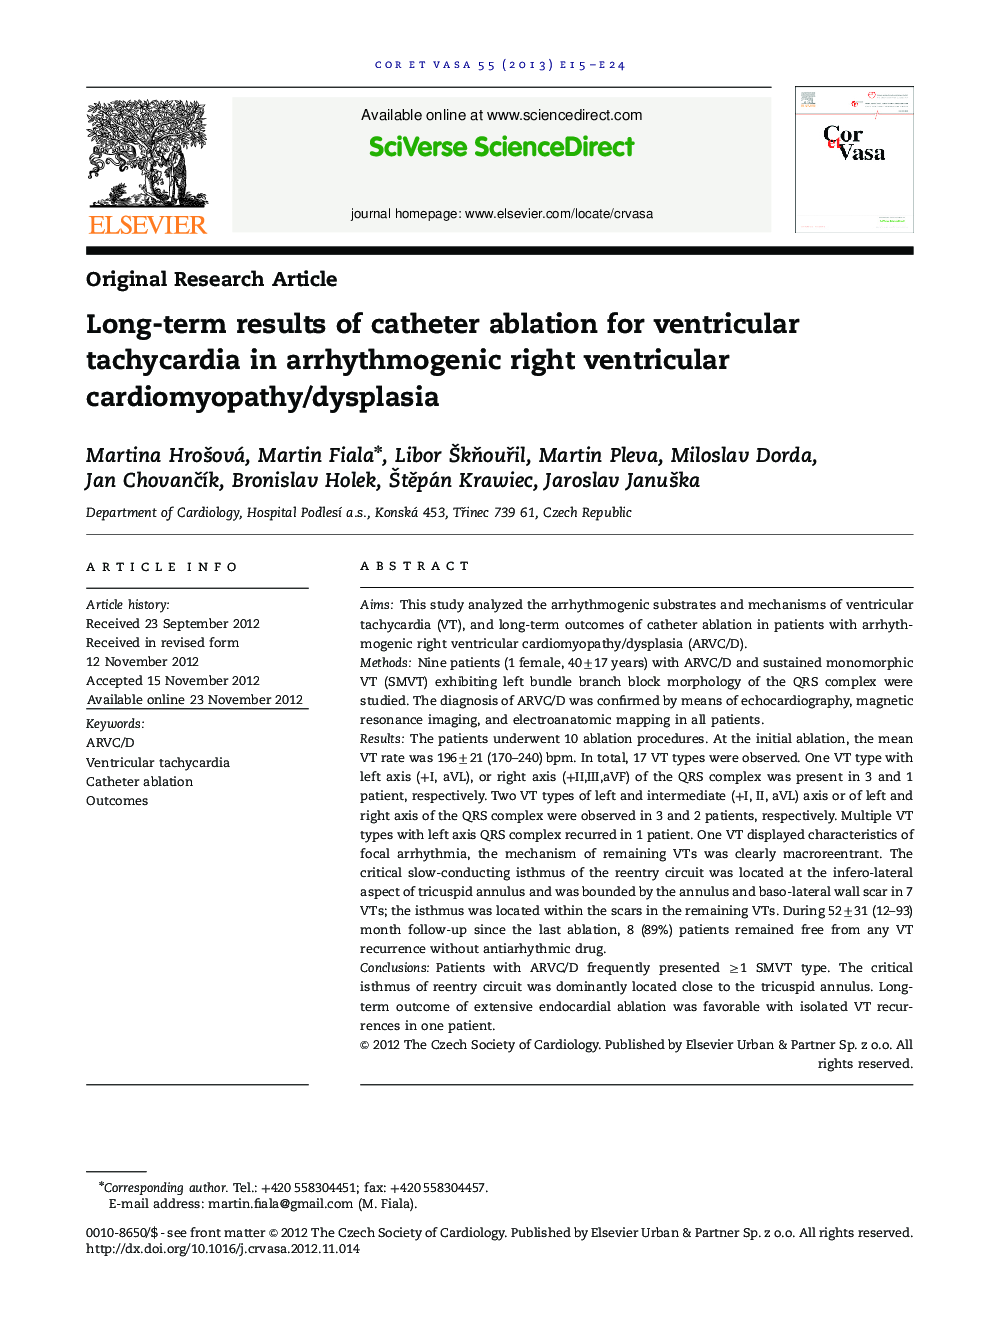 Long-term results of catheter ablation for ventricular tachycardia in arrhythmogenic right ventricular cardiomyopathy/dysplasia